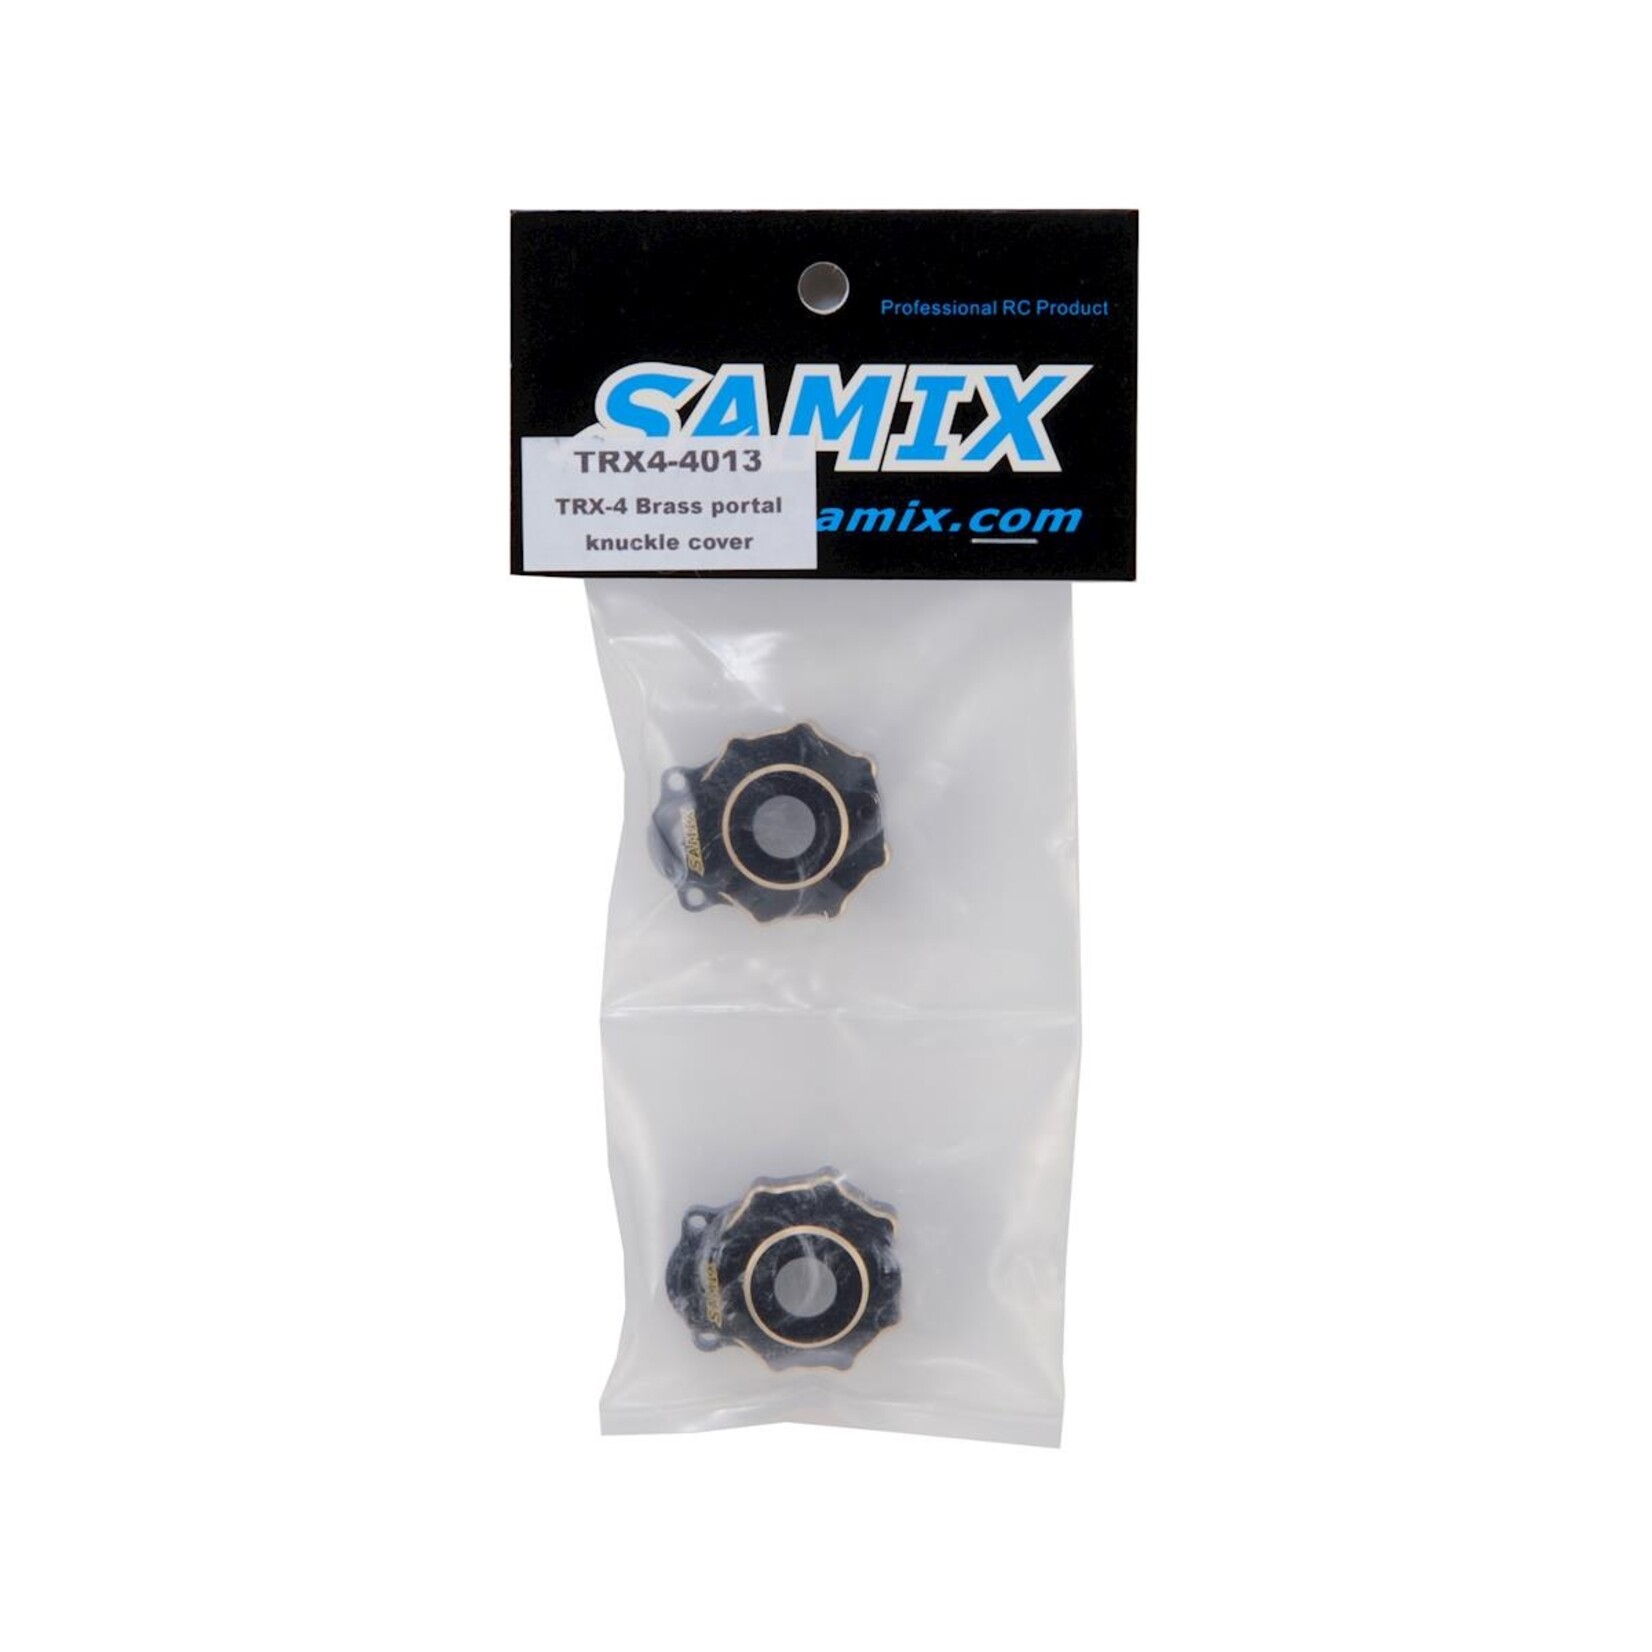 Samix Samix Traxxas TRX-4 Brass Portal Knuckle Cover #SAMTRX4-4013